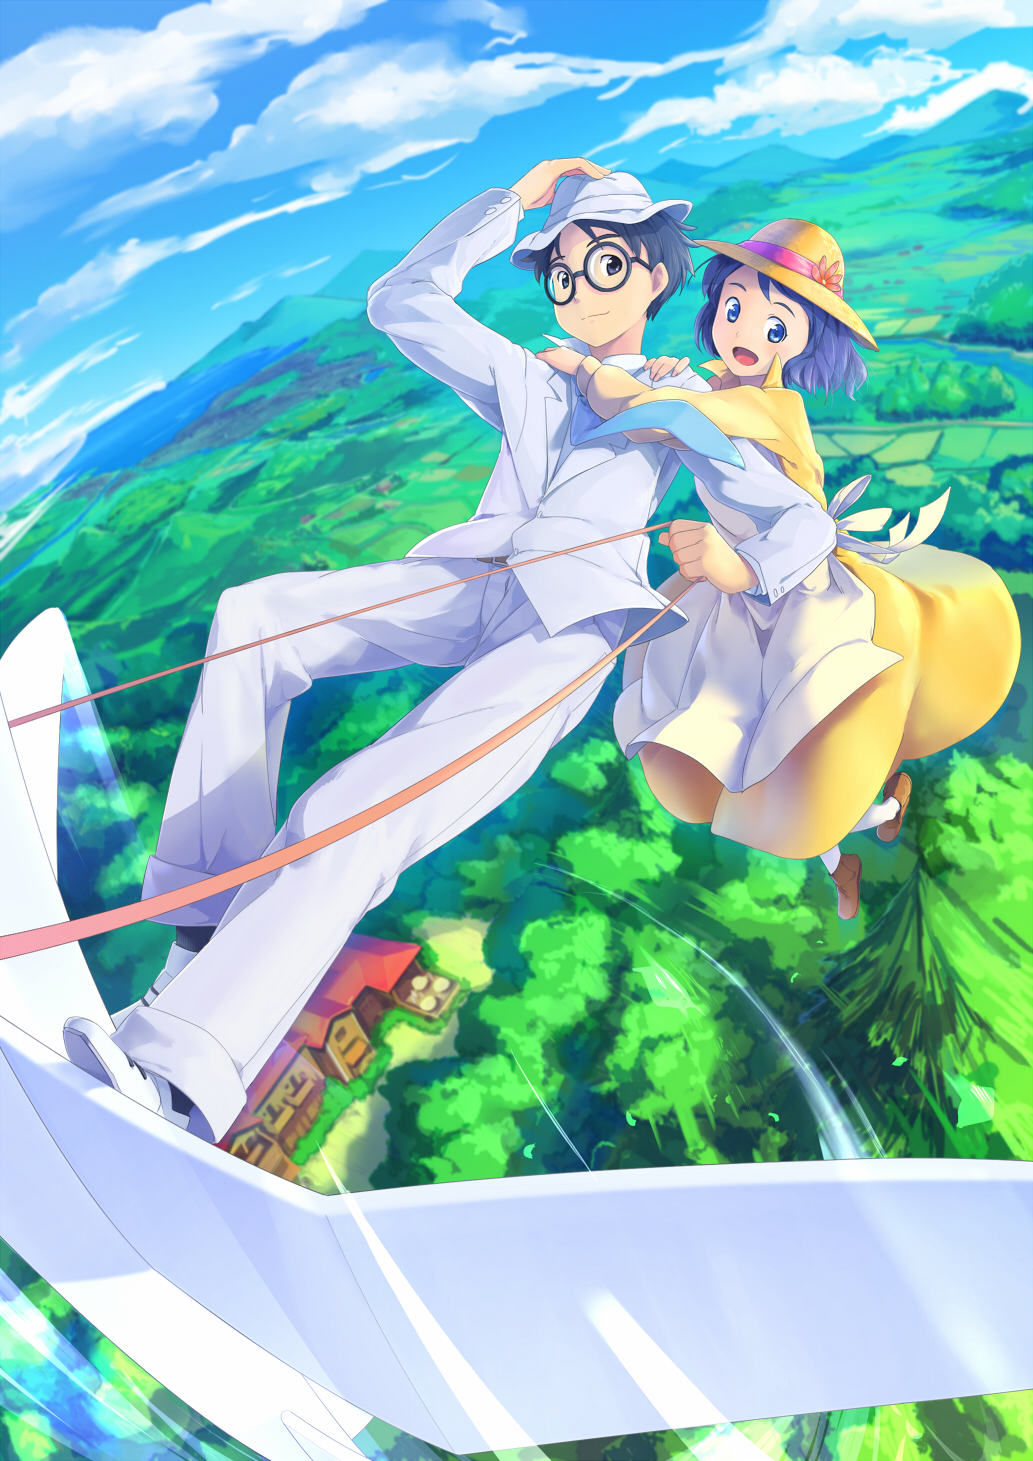 Kaze Tachinu (The Wind Rises) Anime Image Board